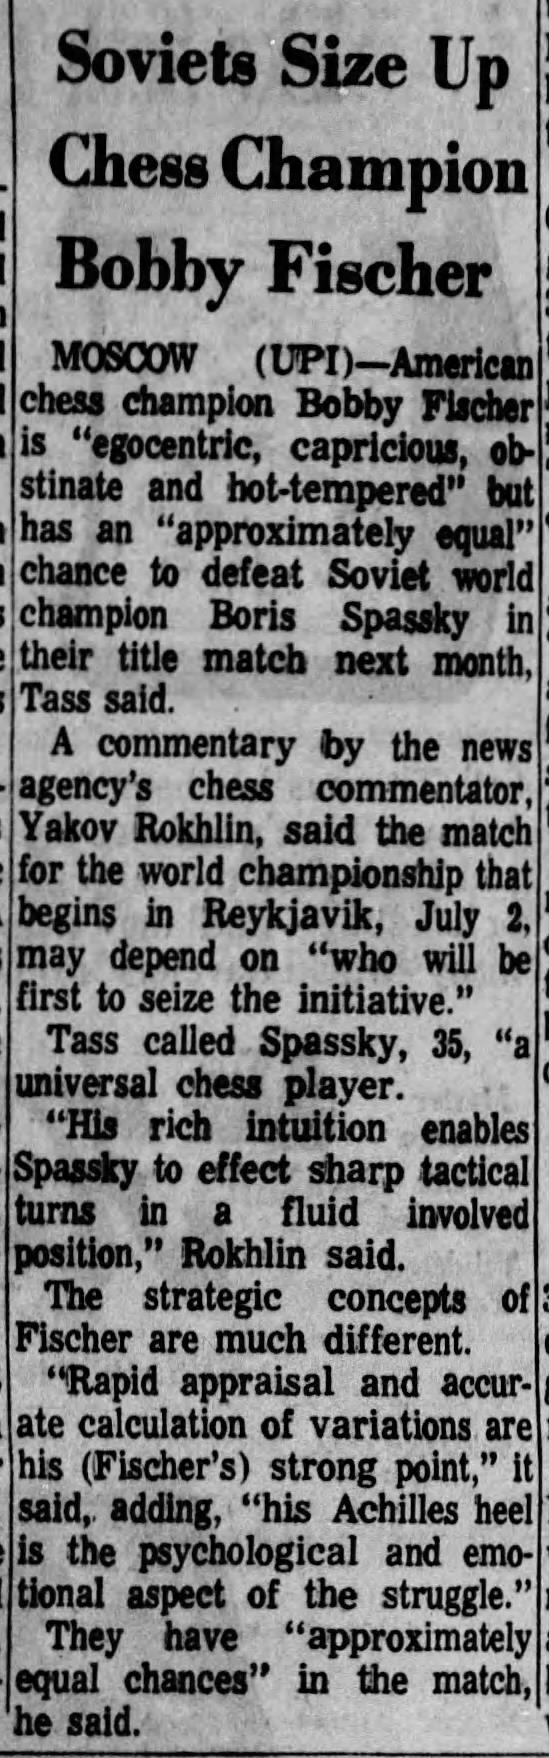 Soviets Size Up Chess Champion Bobby Fischer